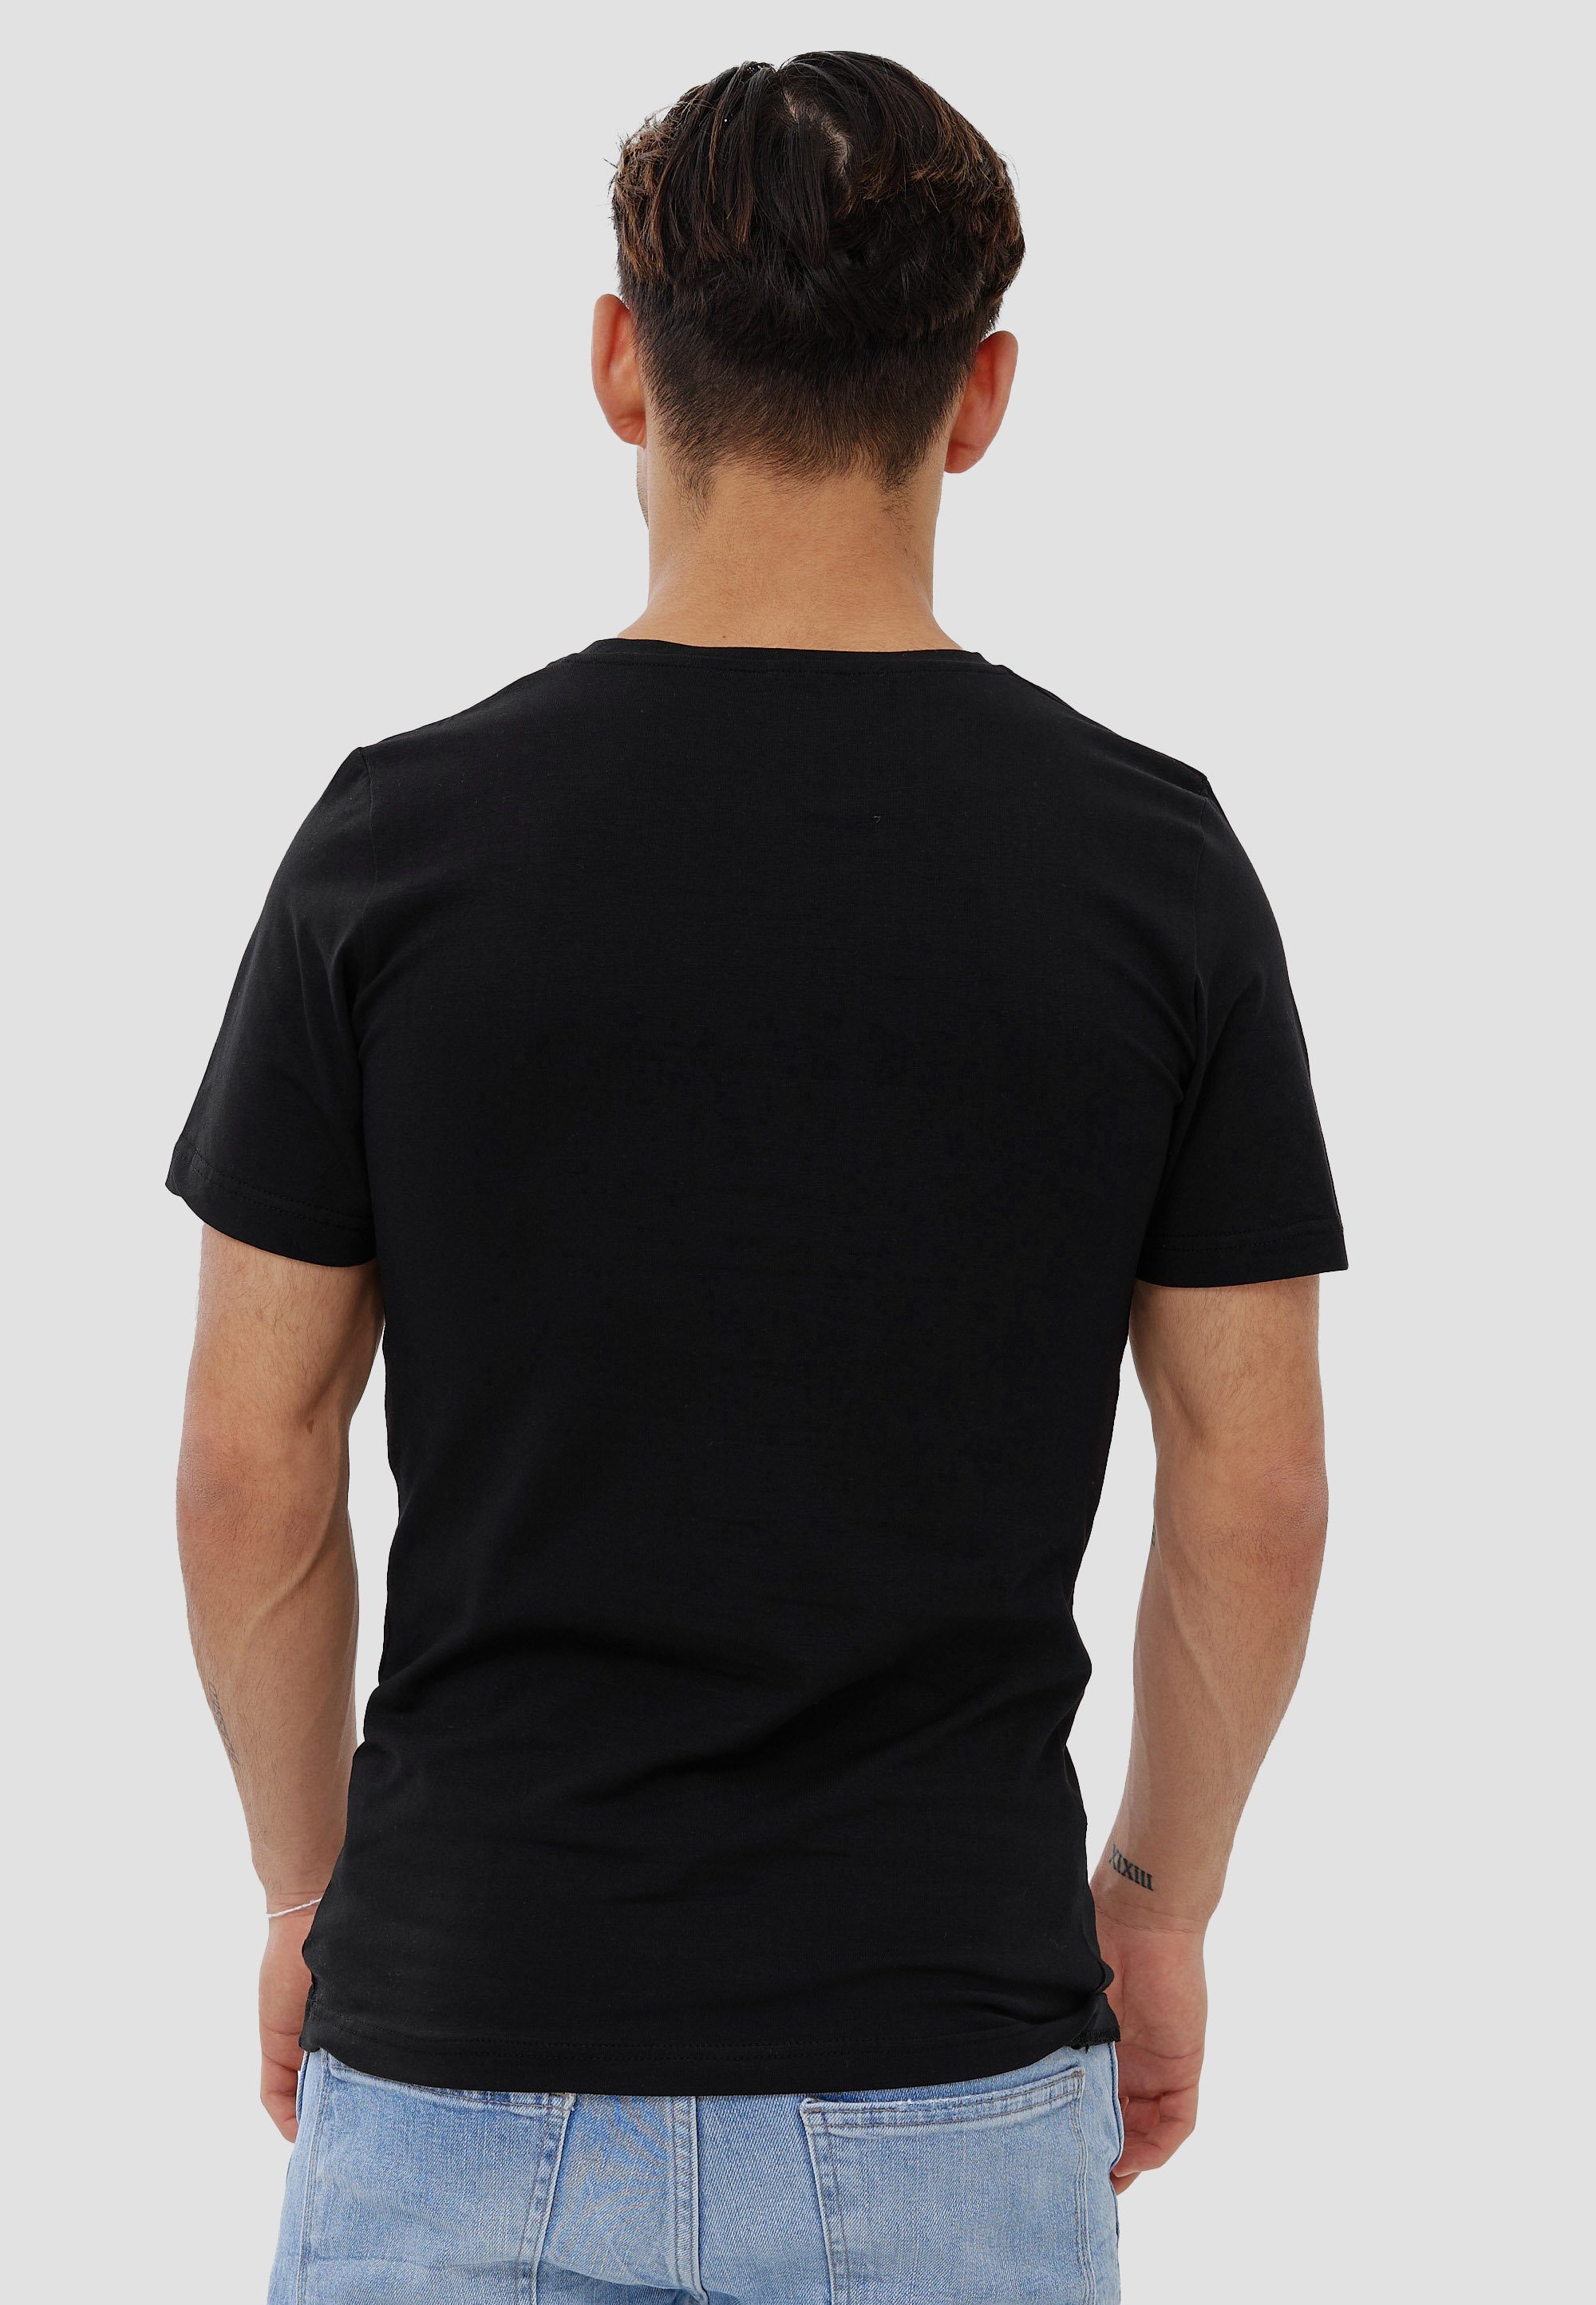 im TS-3227C modischem Kurzarmshirt 1-tlg., Casual Design) Polo Schwarz T-Shirt Fitness OneRedox Freizeit (Shirt Tee,